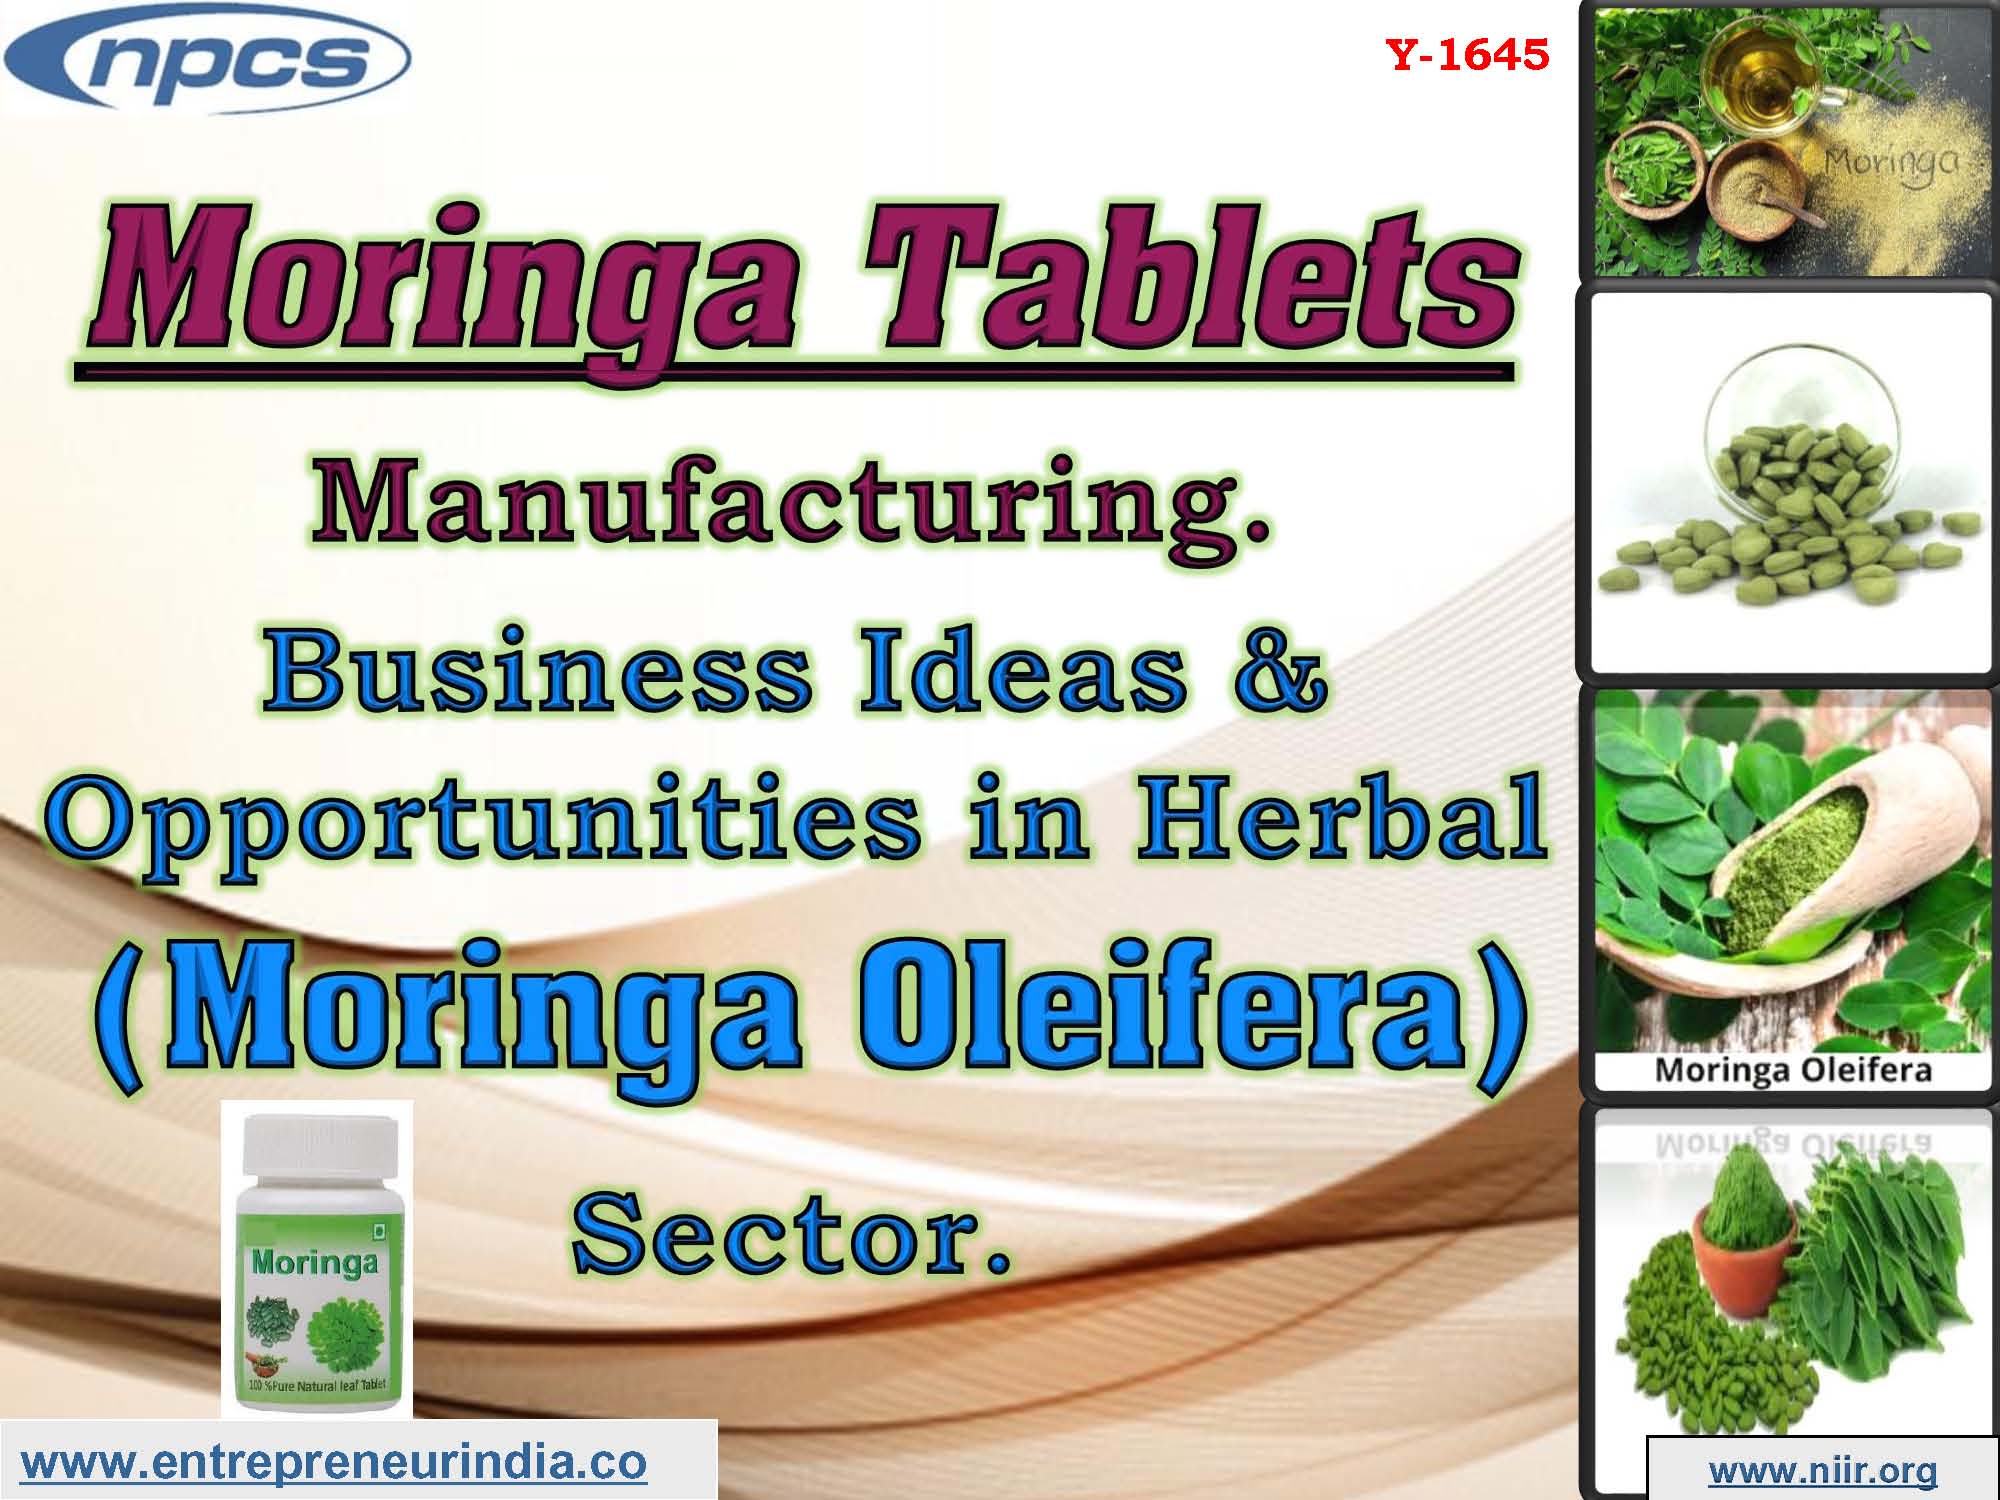 Moringa Tablets Manufacturing